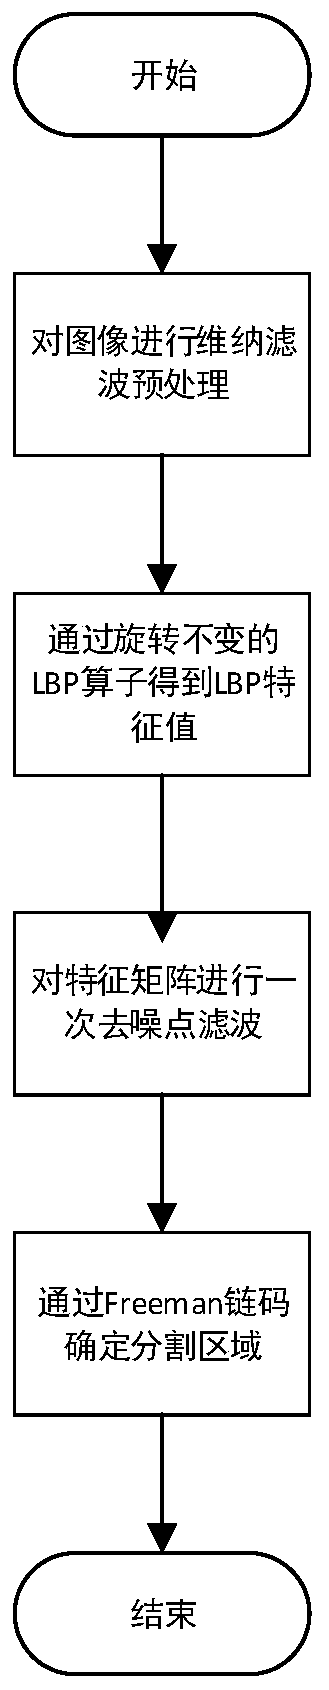 Image segmentation method based on LBP and chain code technology